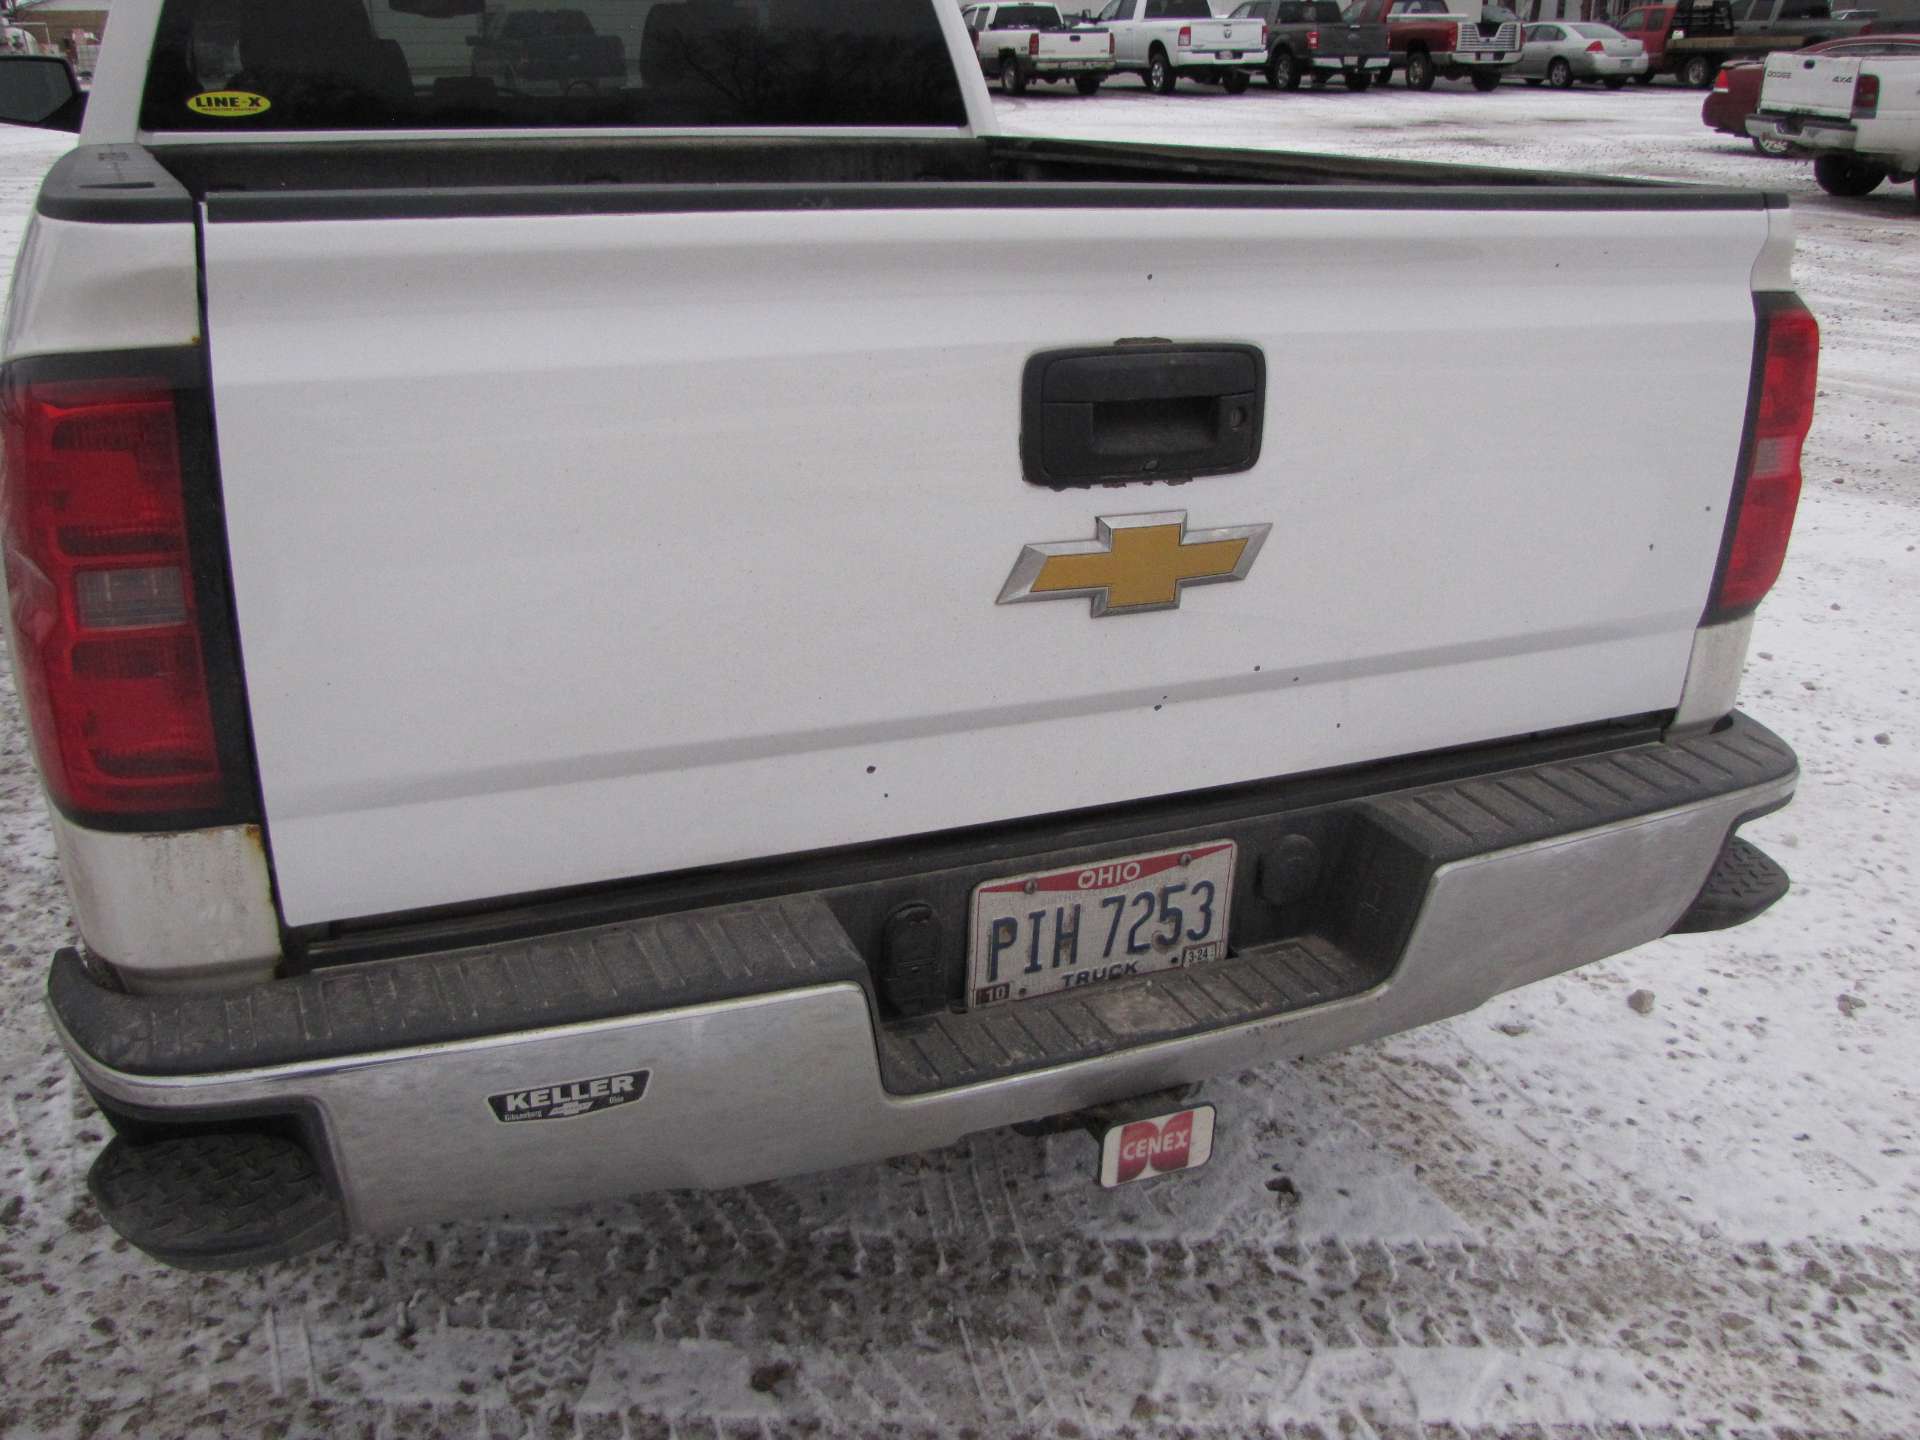 2014 Chevy Silverado 1500 pickup truck - Image 30 of 55